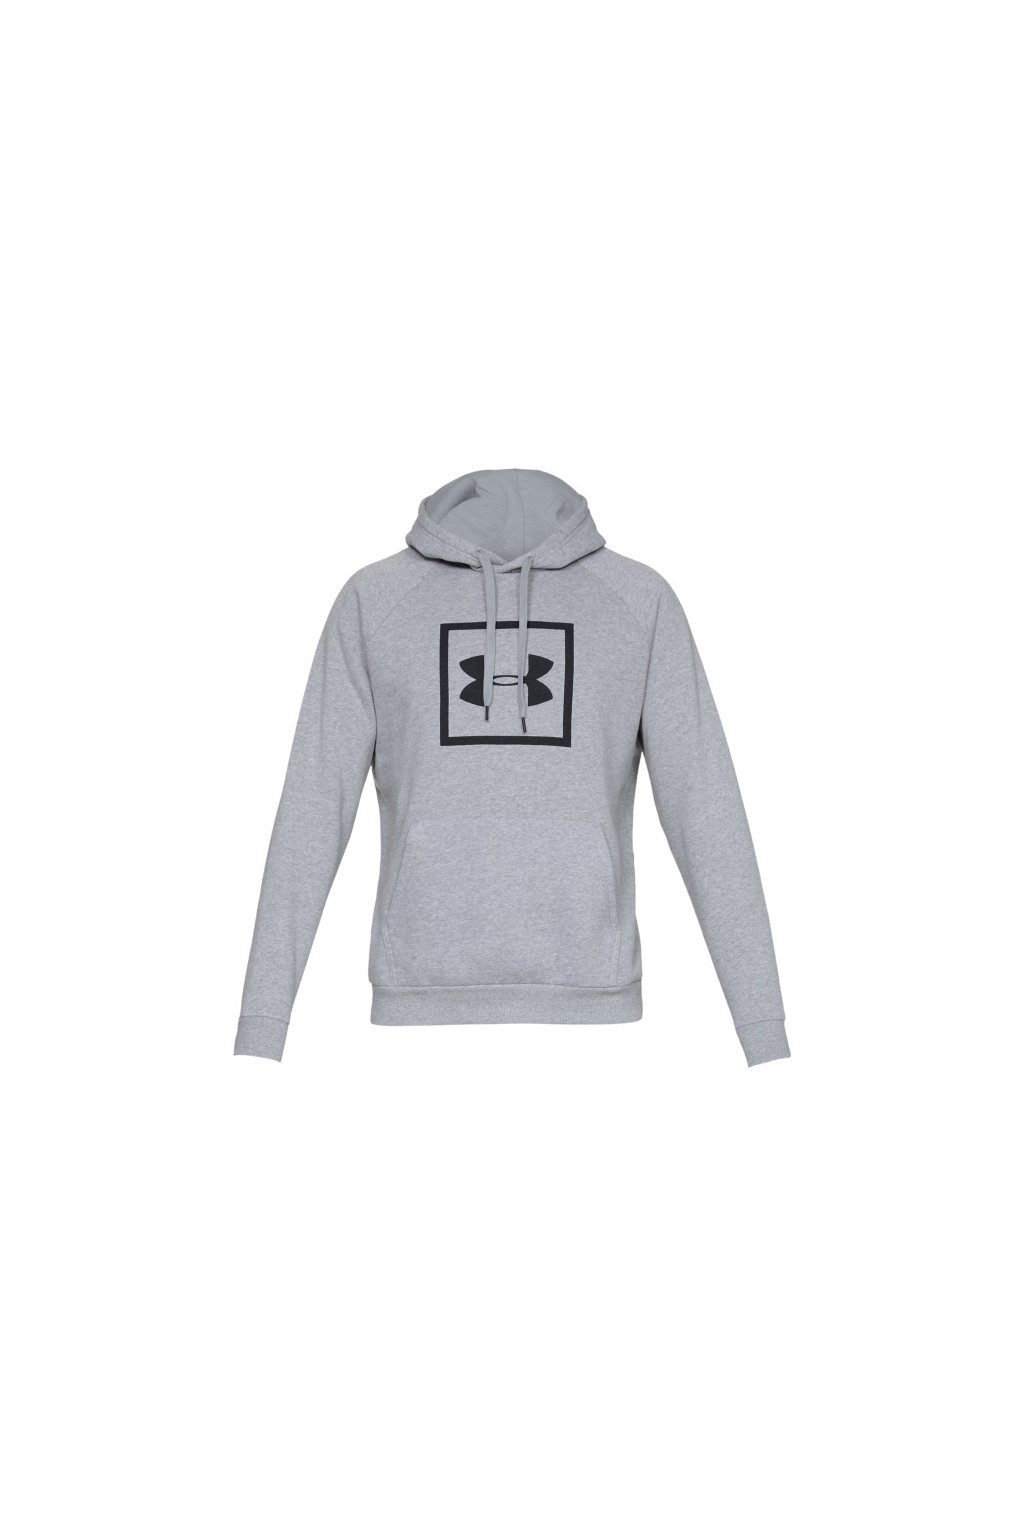 mikina under armour rival fleece logo hoodie 1329745 035[1]